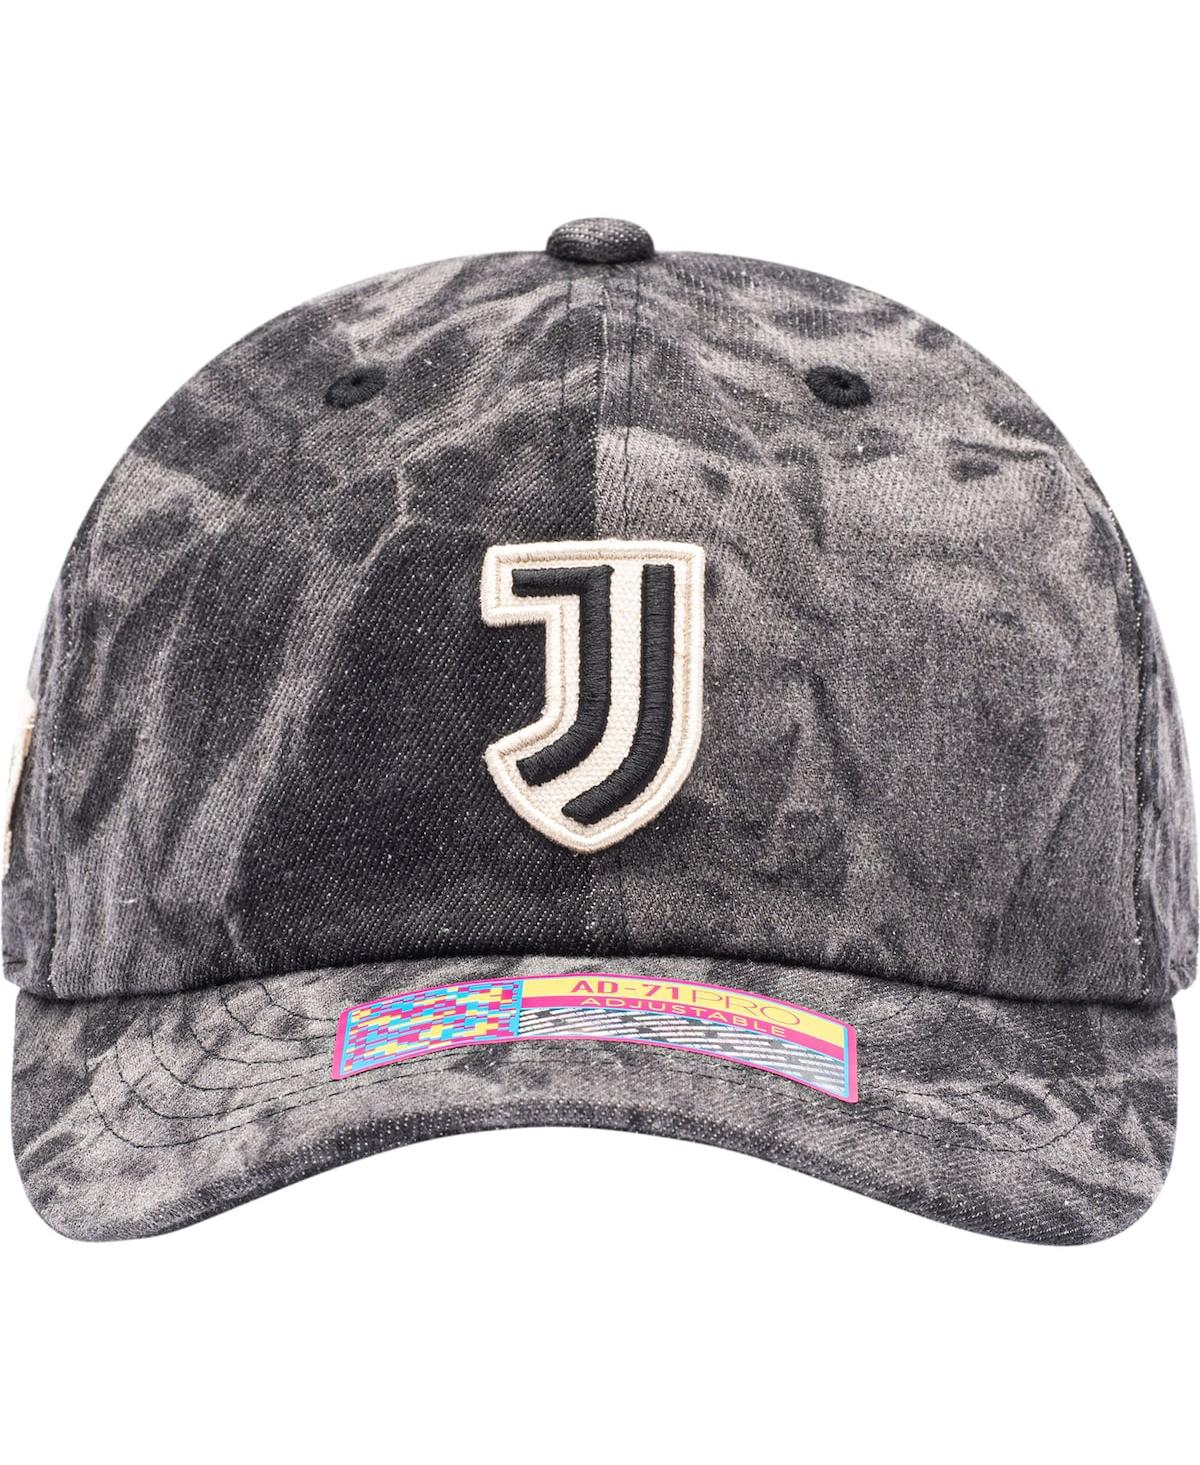 Shop Fan Ink Men's Black Juventus Club Ranch Adjustable Hat